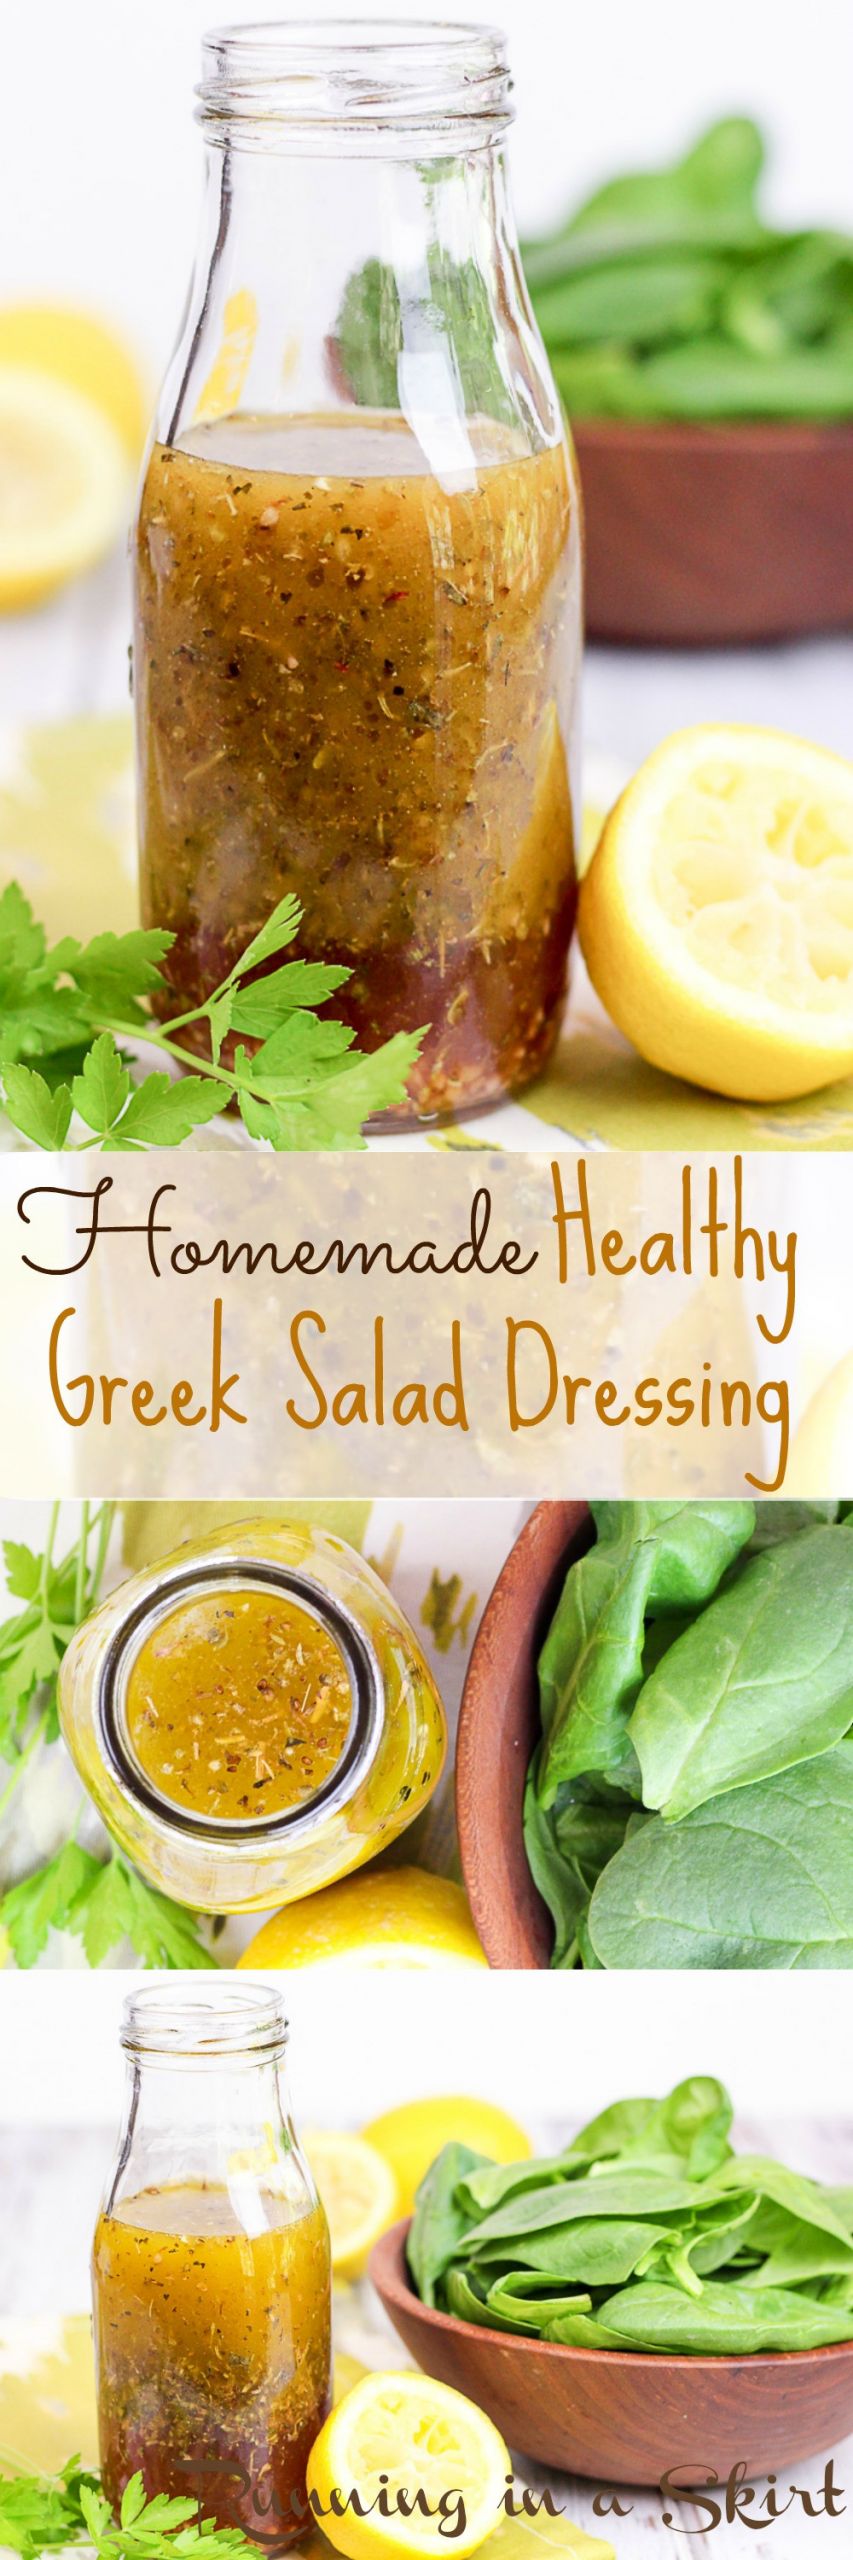 Salad Dressings With Olive Oil
 7 Ingre nt Healthy Greek Salad Dressing